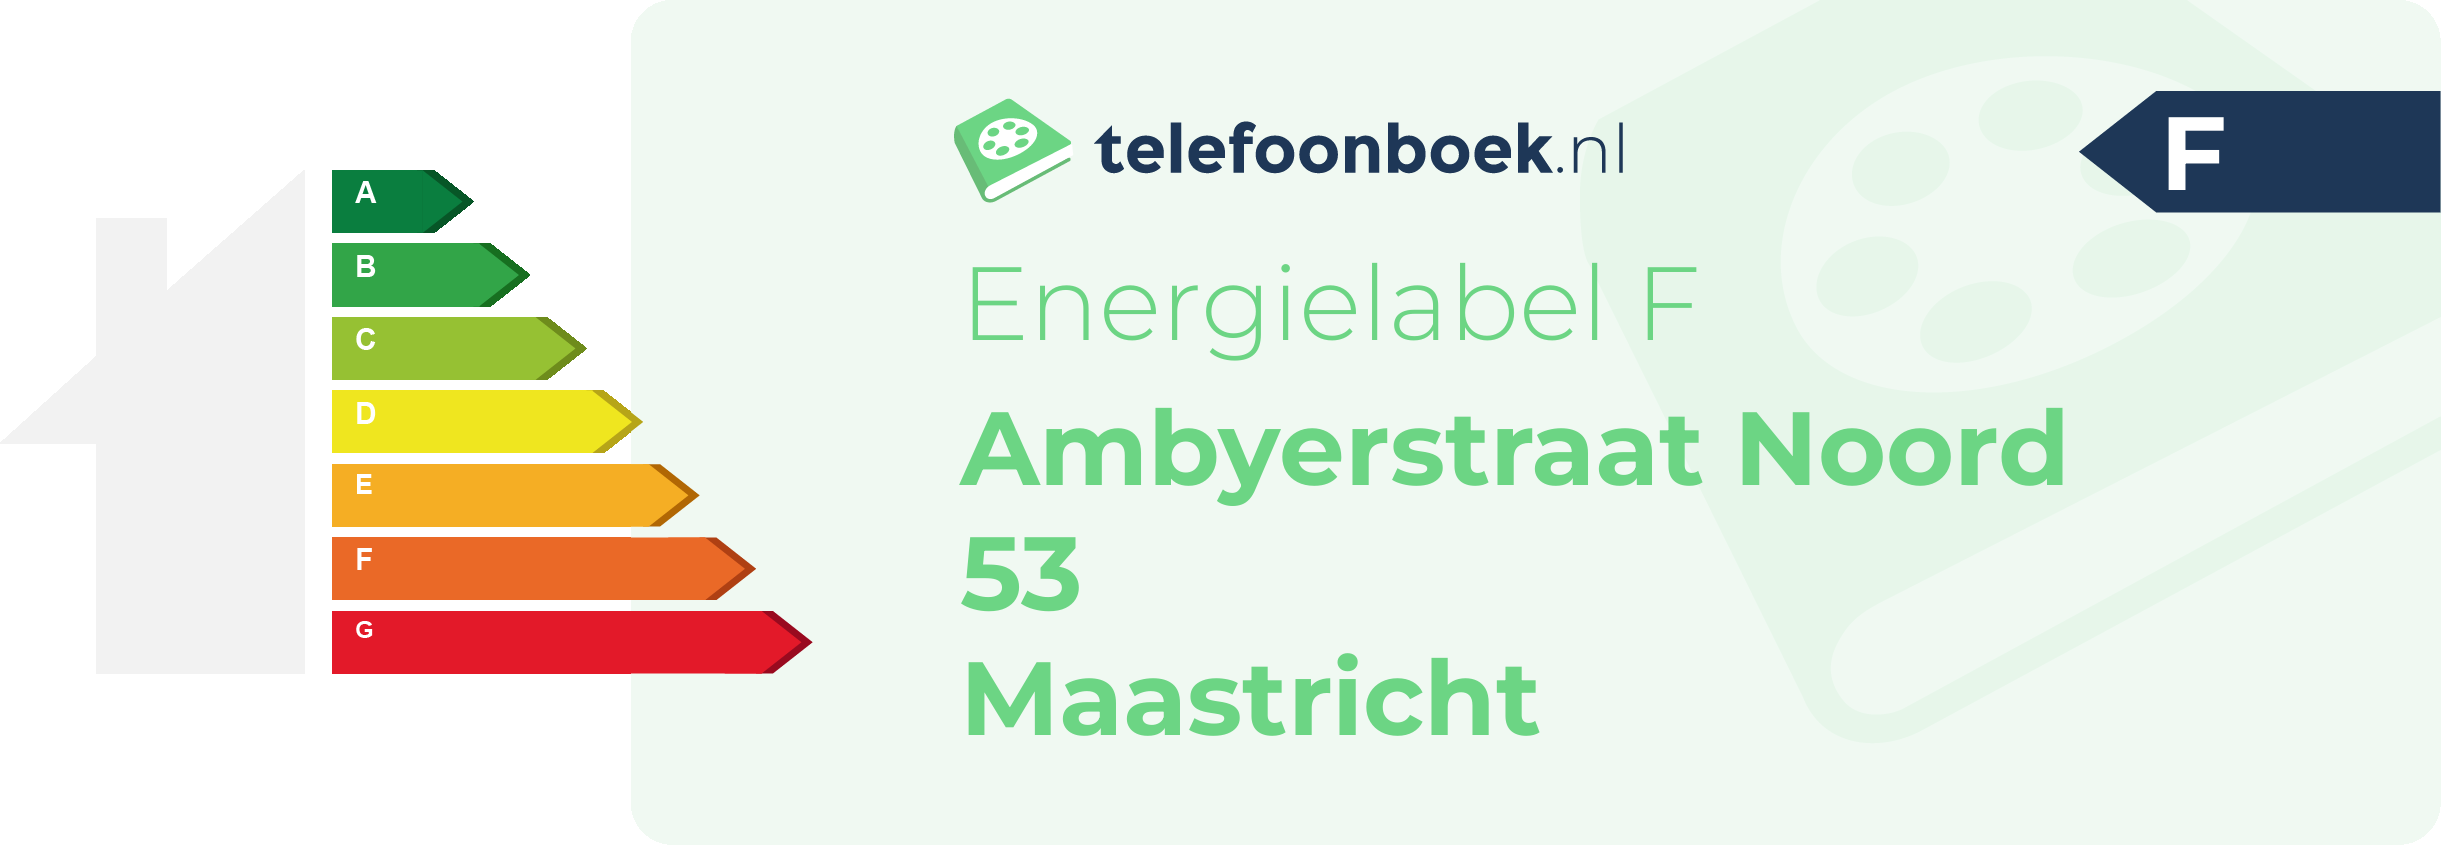 Energielabel Ambyerstraat Noord 53 Maastricht